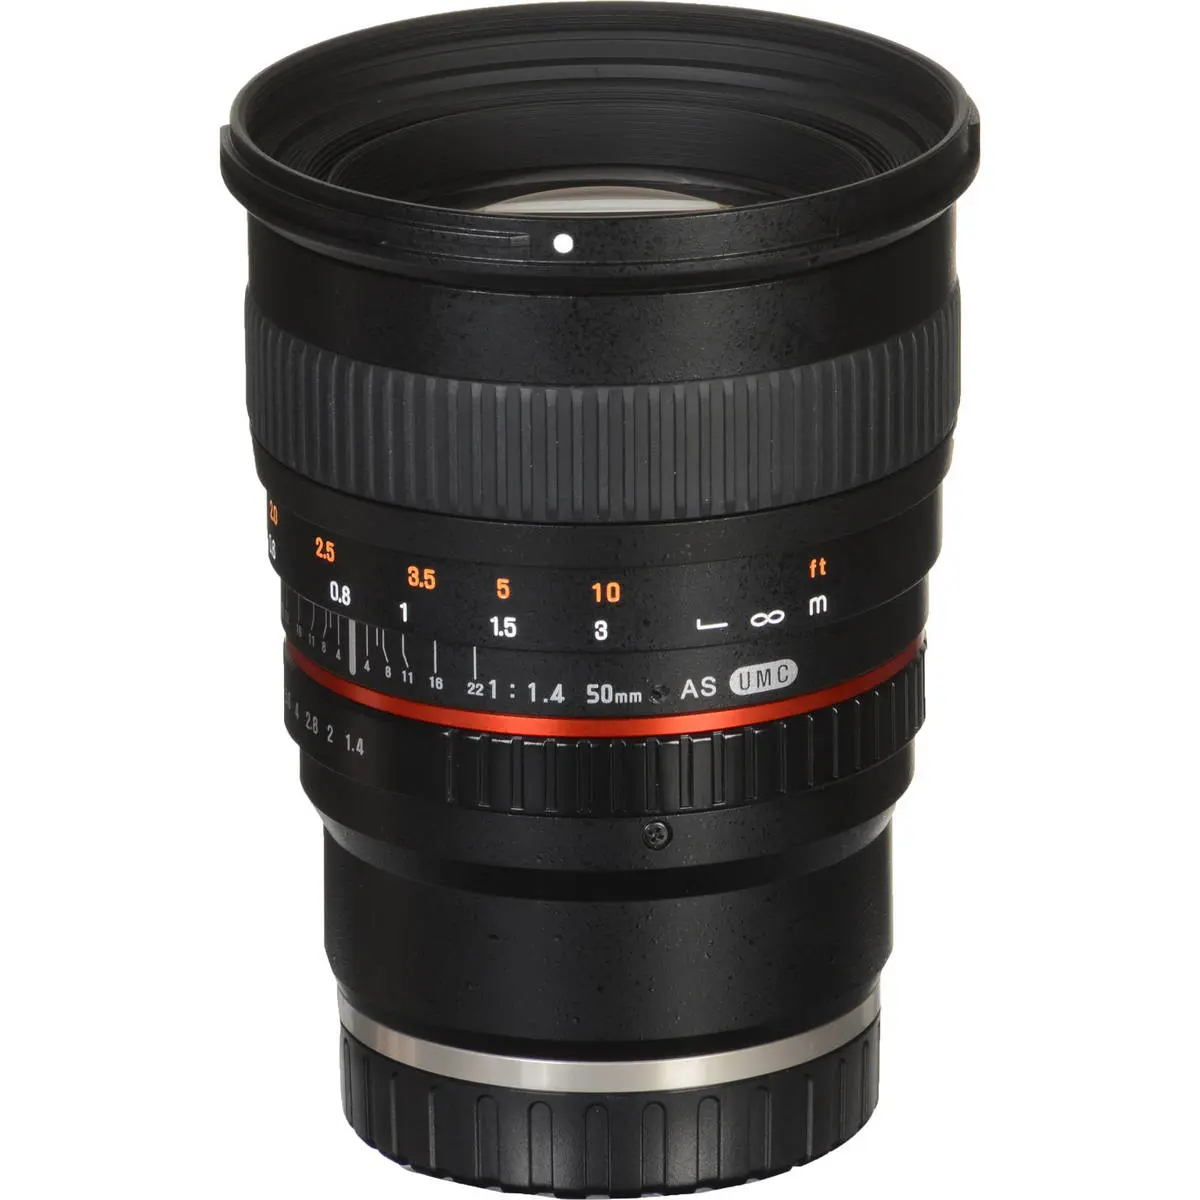 11. Samyang 50 mm f/1.4 AS UMC (Sony A) Lens